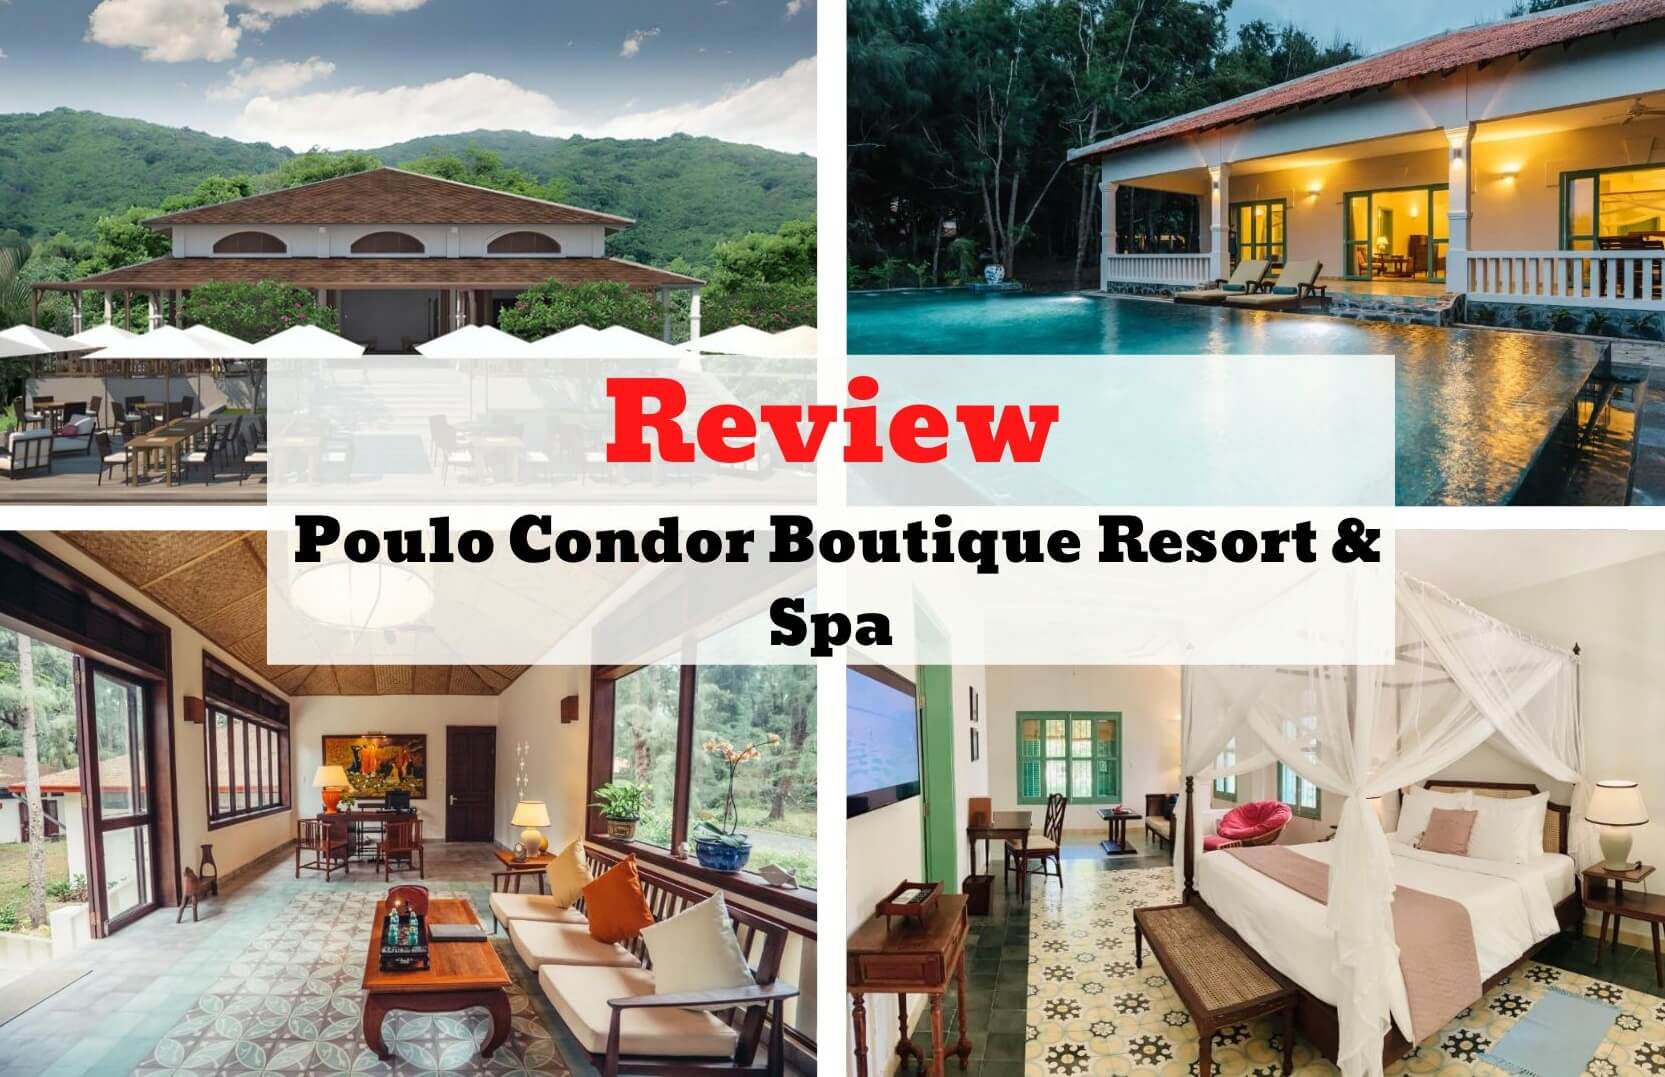 Review Poulo Condor Boutique Resort & Spa - Kiến trúc đậm đà bản sắc Việt 